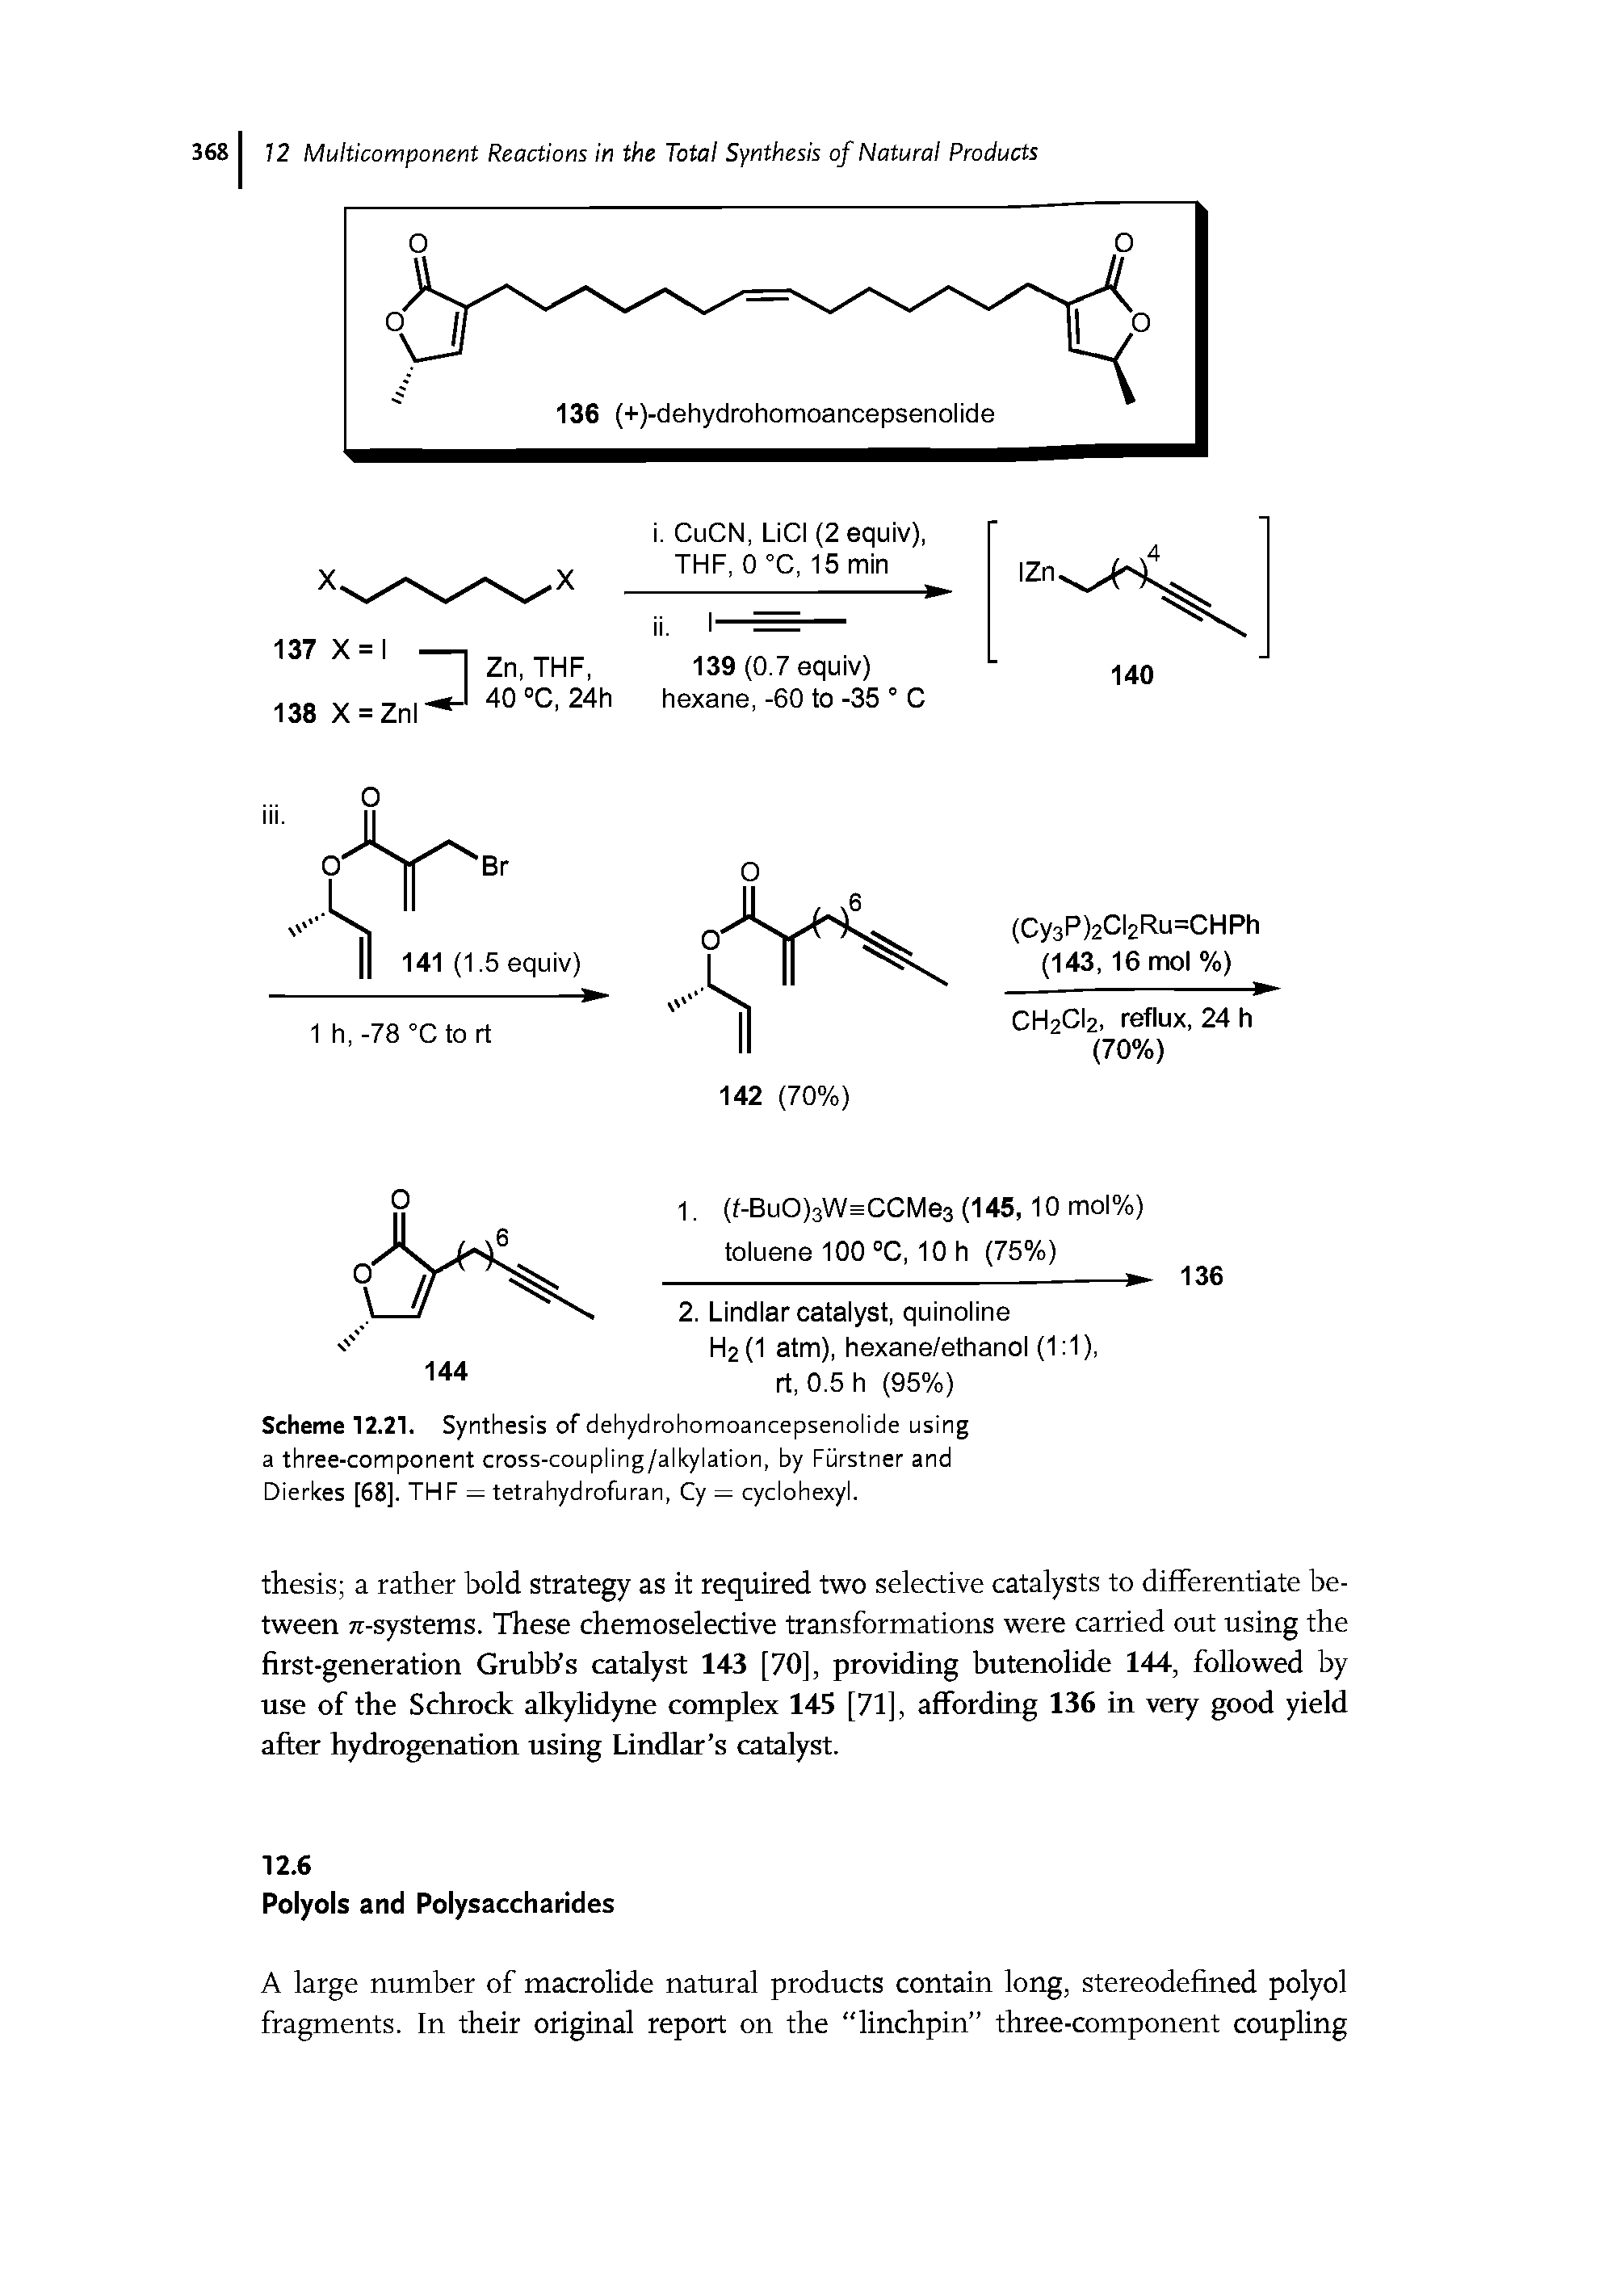 Scheme 12.21. Synthesis of dehydrohomoancepsenolide using a three-component cross-coupling/alkylation, by Furstner and Dierkes [68]. THF — tetrahydrofuran, Cy — cyclohexyl.